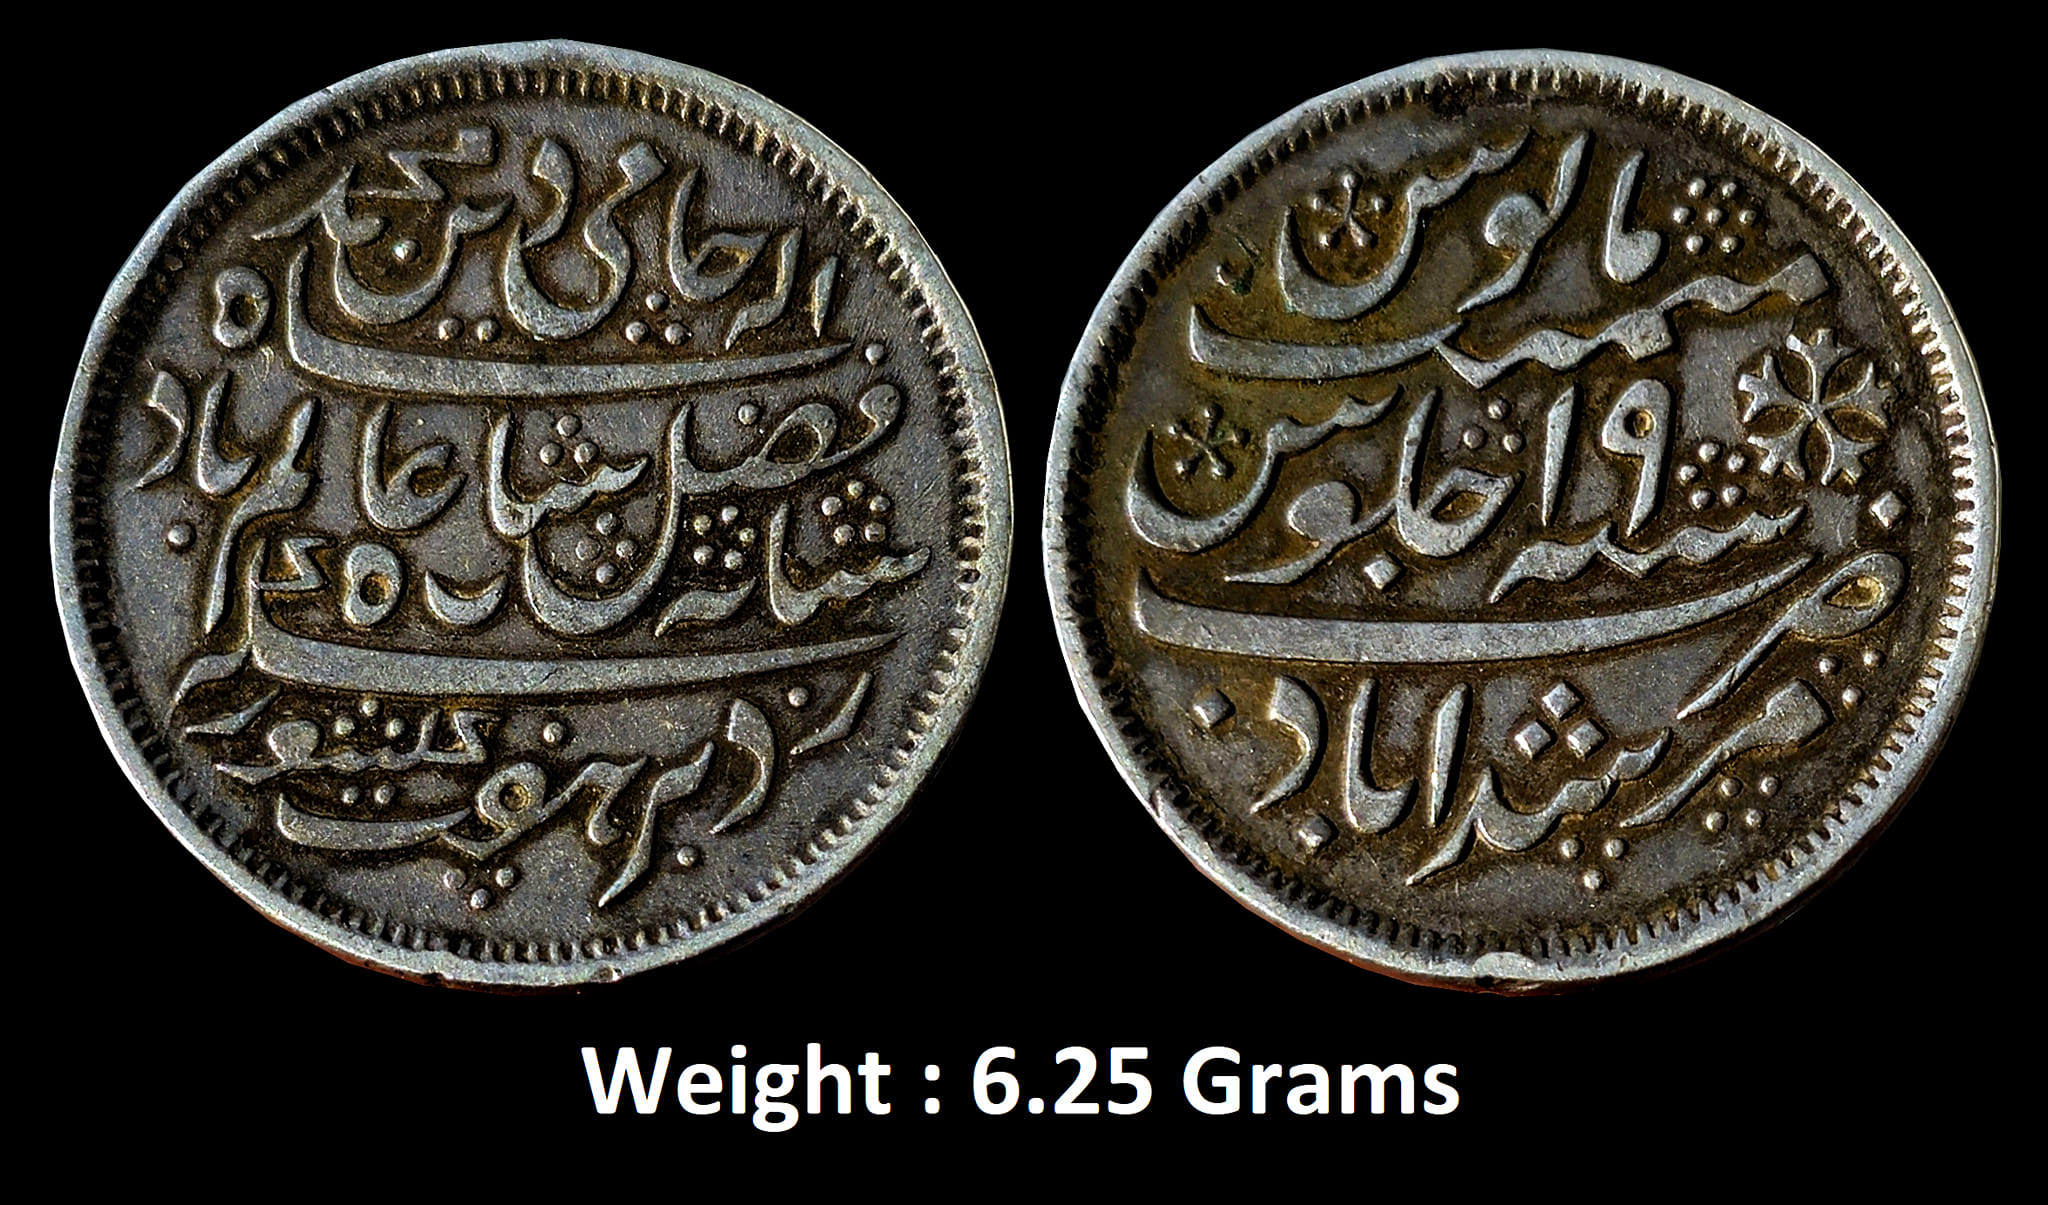 EIC, Bengal Presidency, INO Shah Alam II (AH 1174-1221), Extremely fine Silver 1/2 Rupee,
Murshidabad Mint, RY 19, KM 97.1
Weight : 6.25 Grams